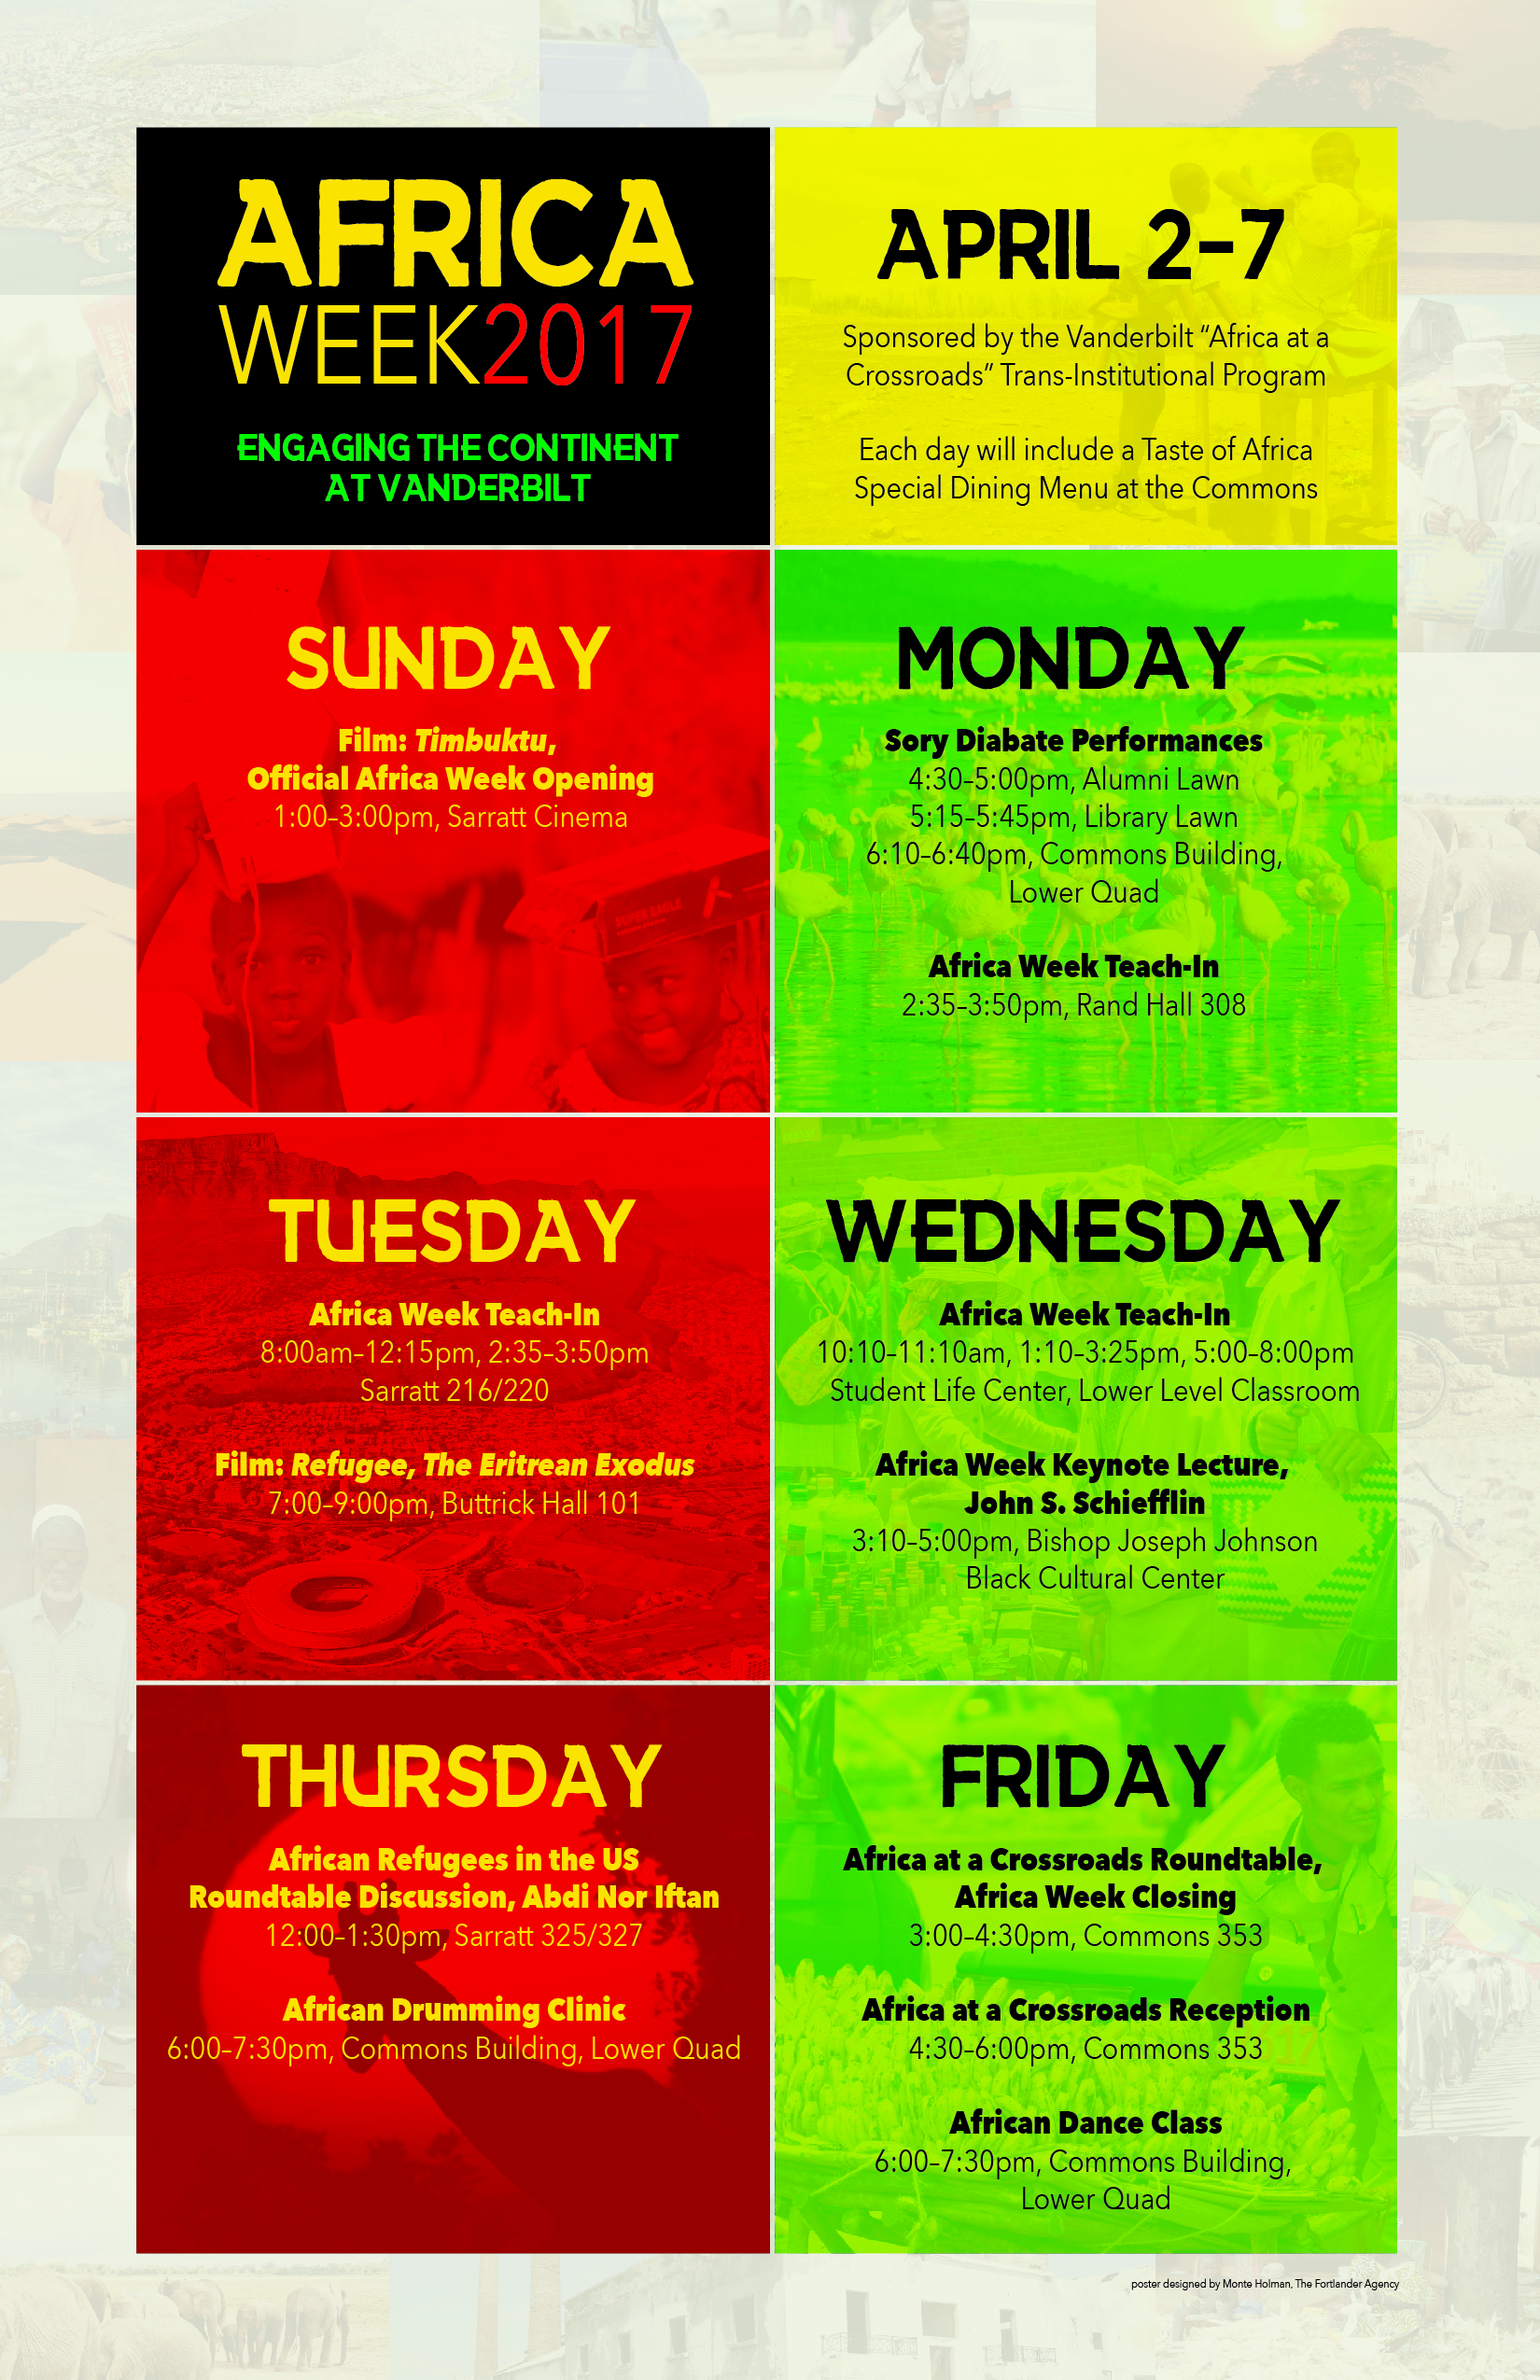 Africa Week schedule